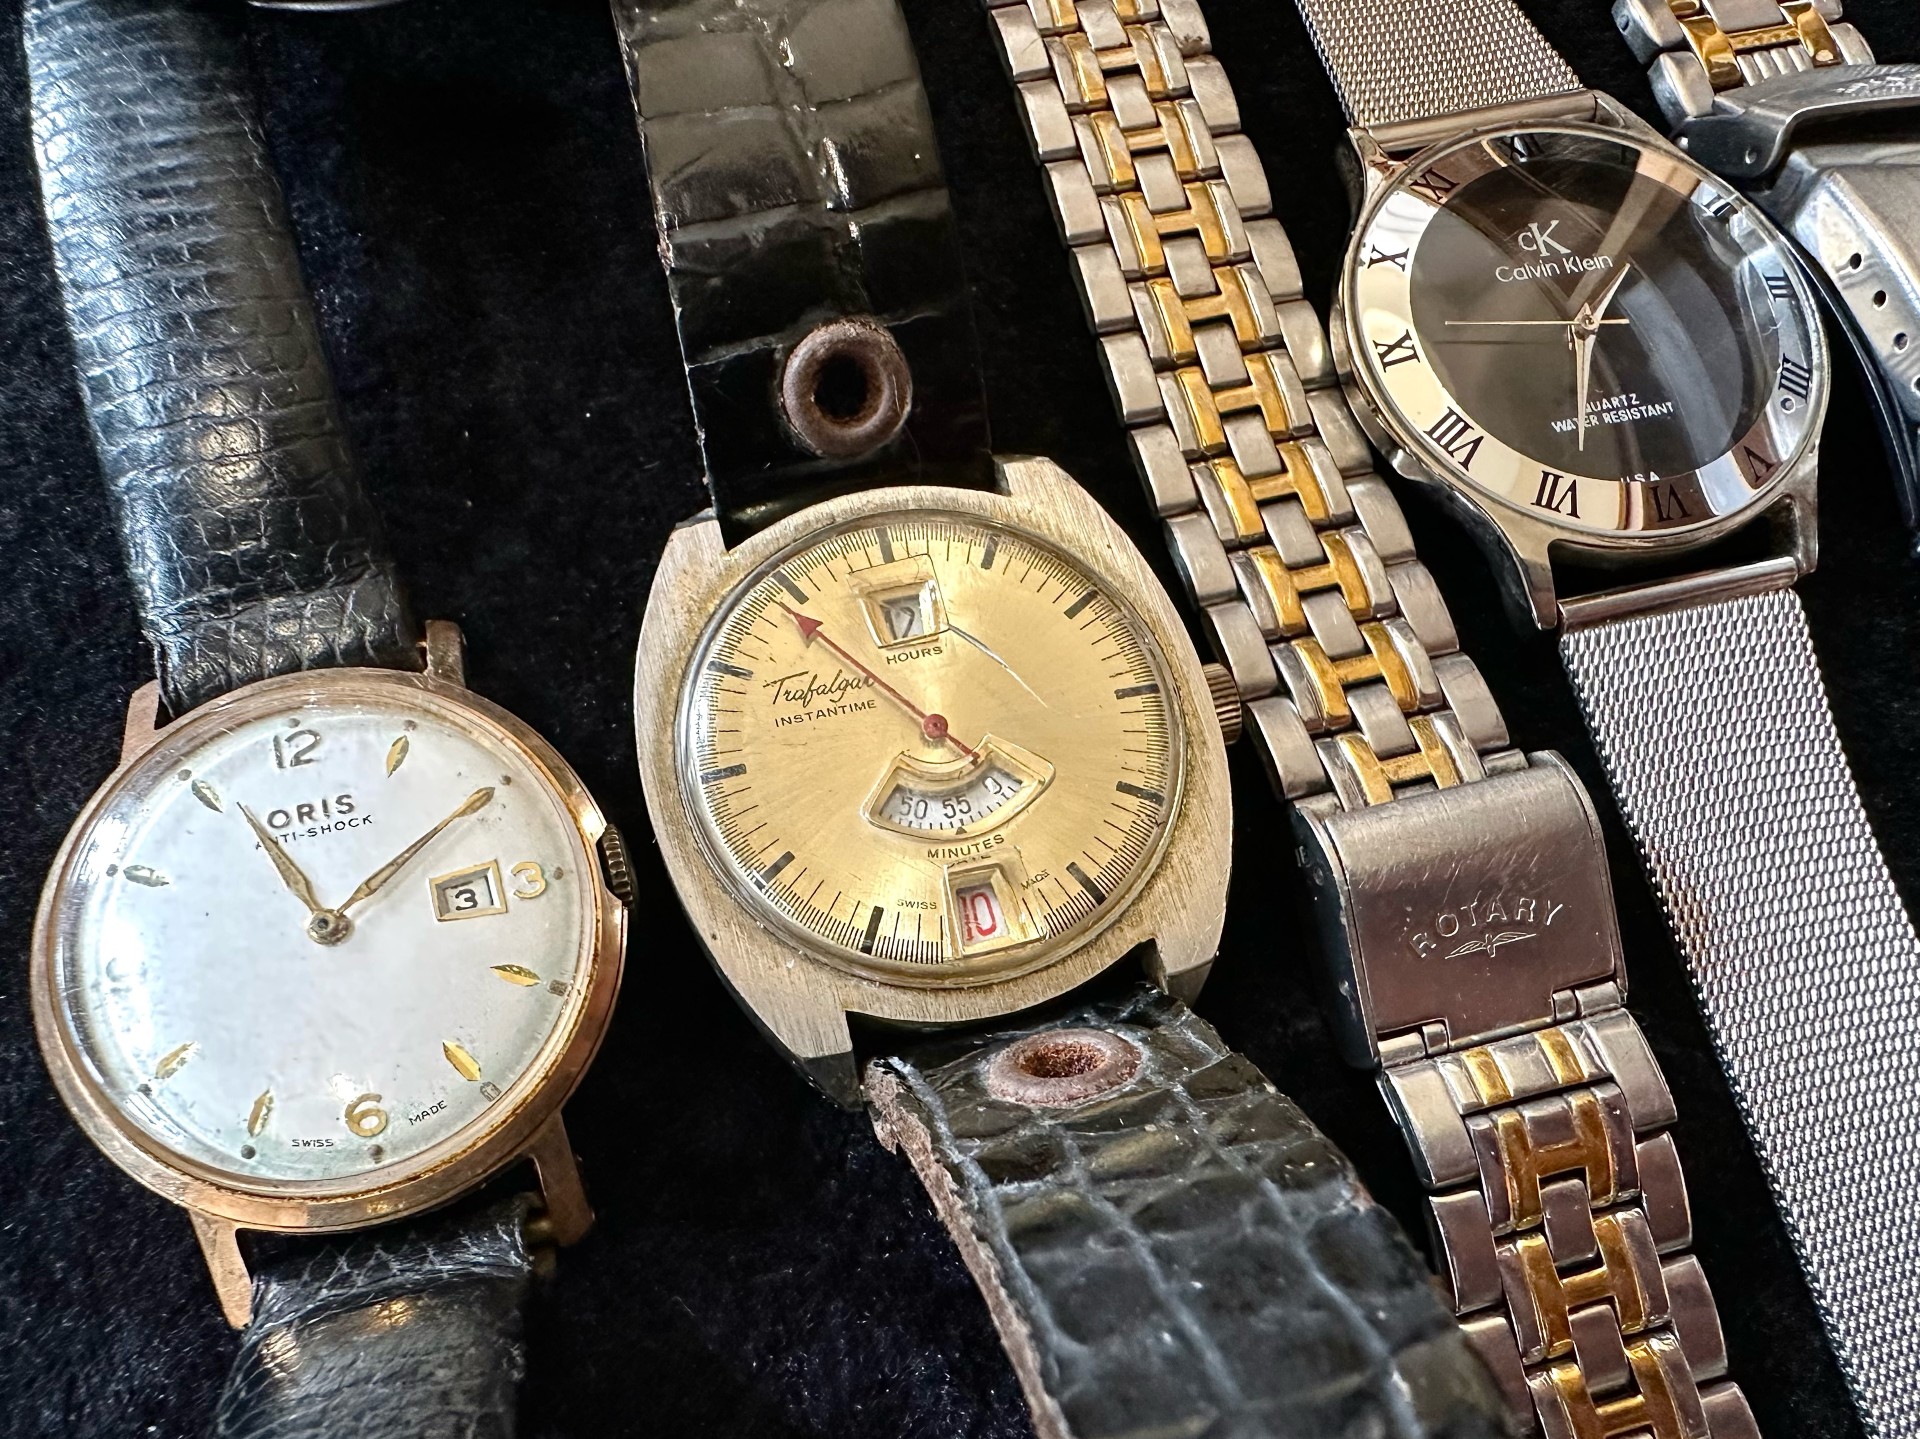 Collection of Gents Wristwatches. includes Seiko, Oris, Trafalgar, Genova, Coboma, Rotary etc. - Image 3 of 4